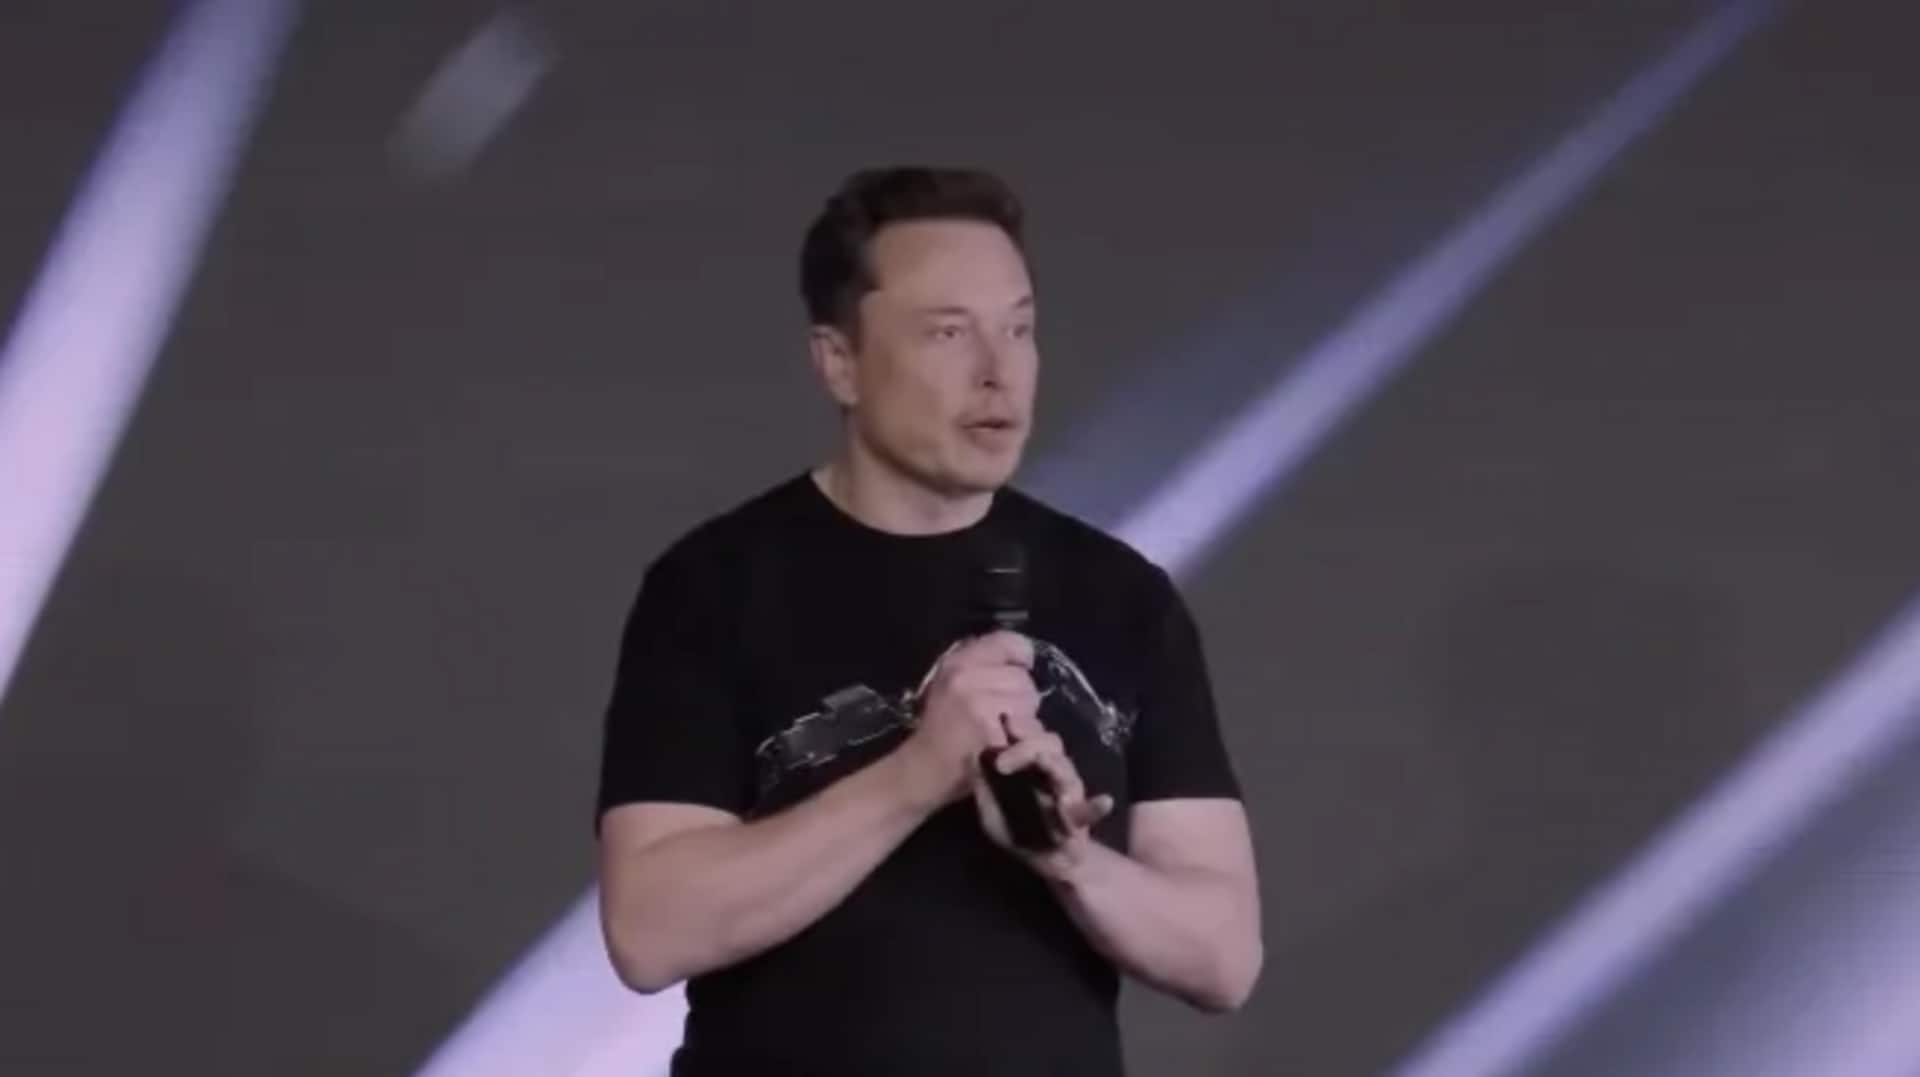 Elon Musk's deepfake used to push crypto scam via YouTube